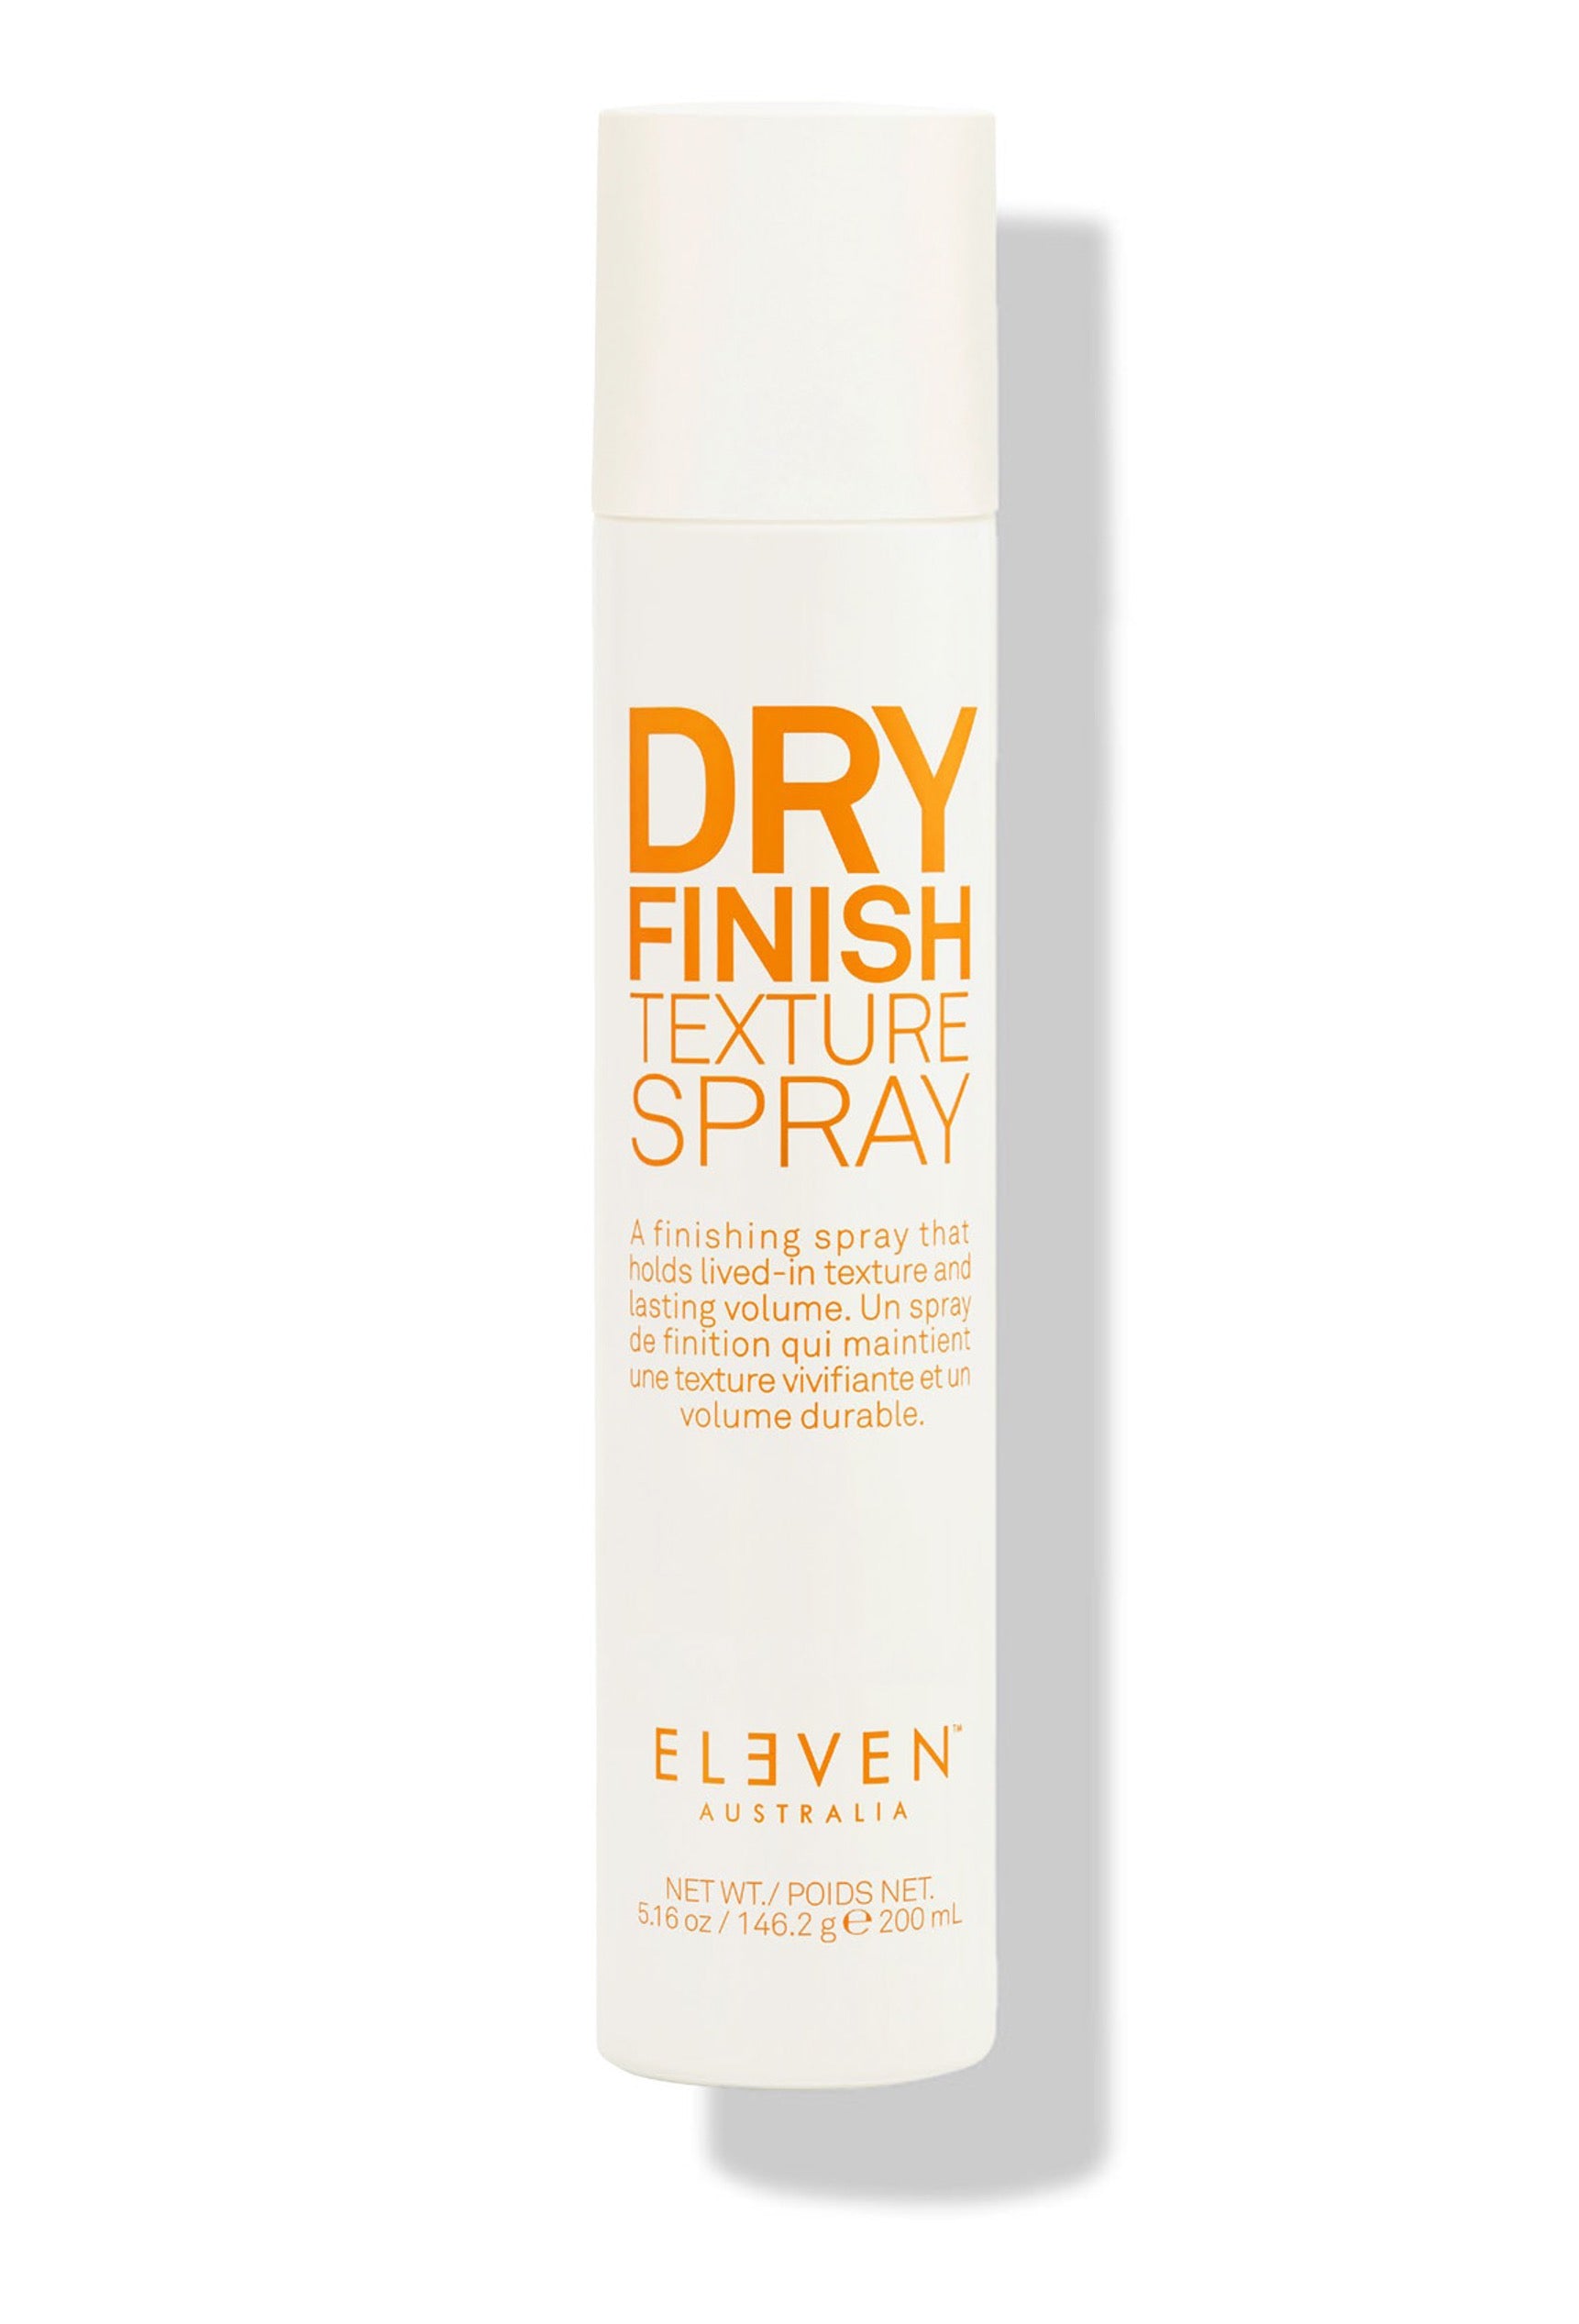 Eleven Australia dry finish texture spray